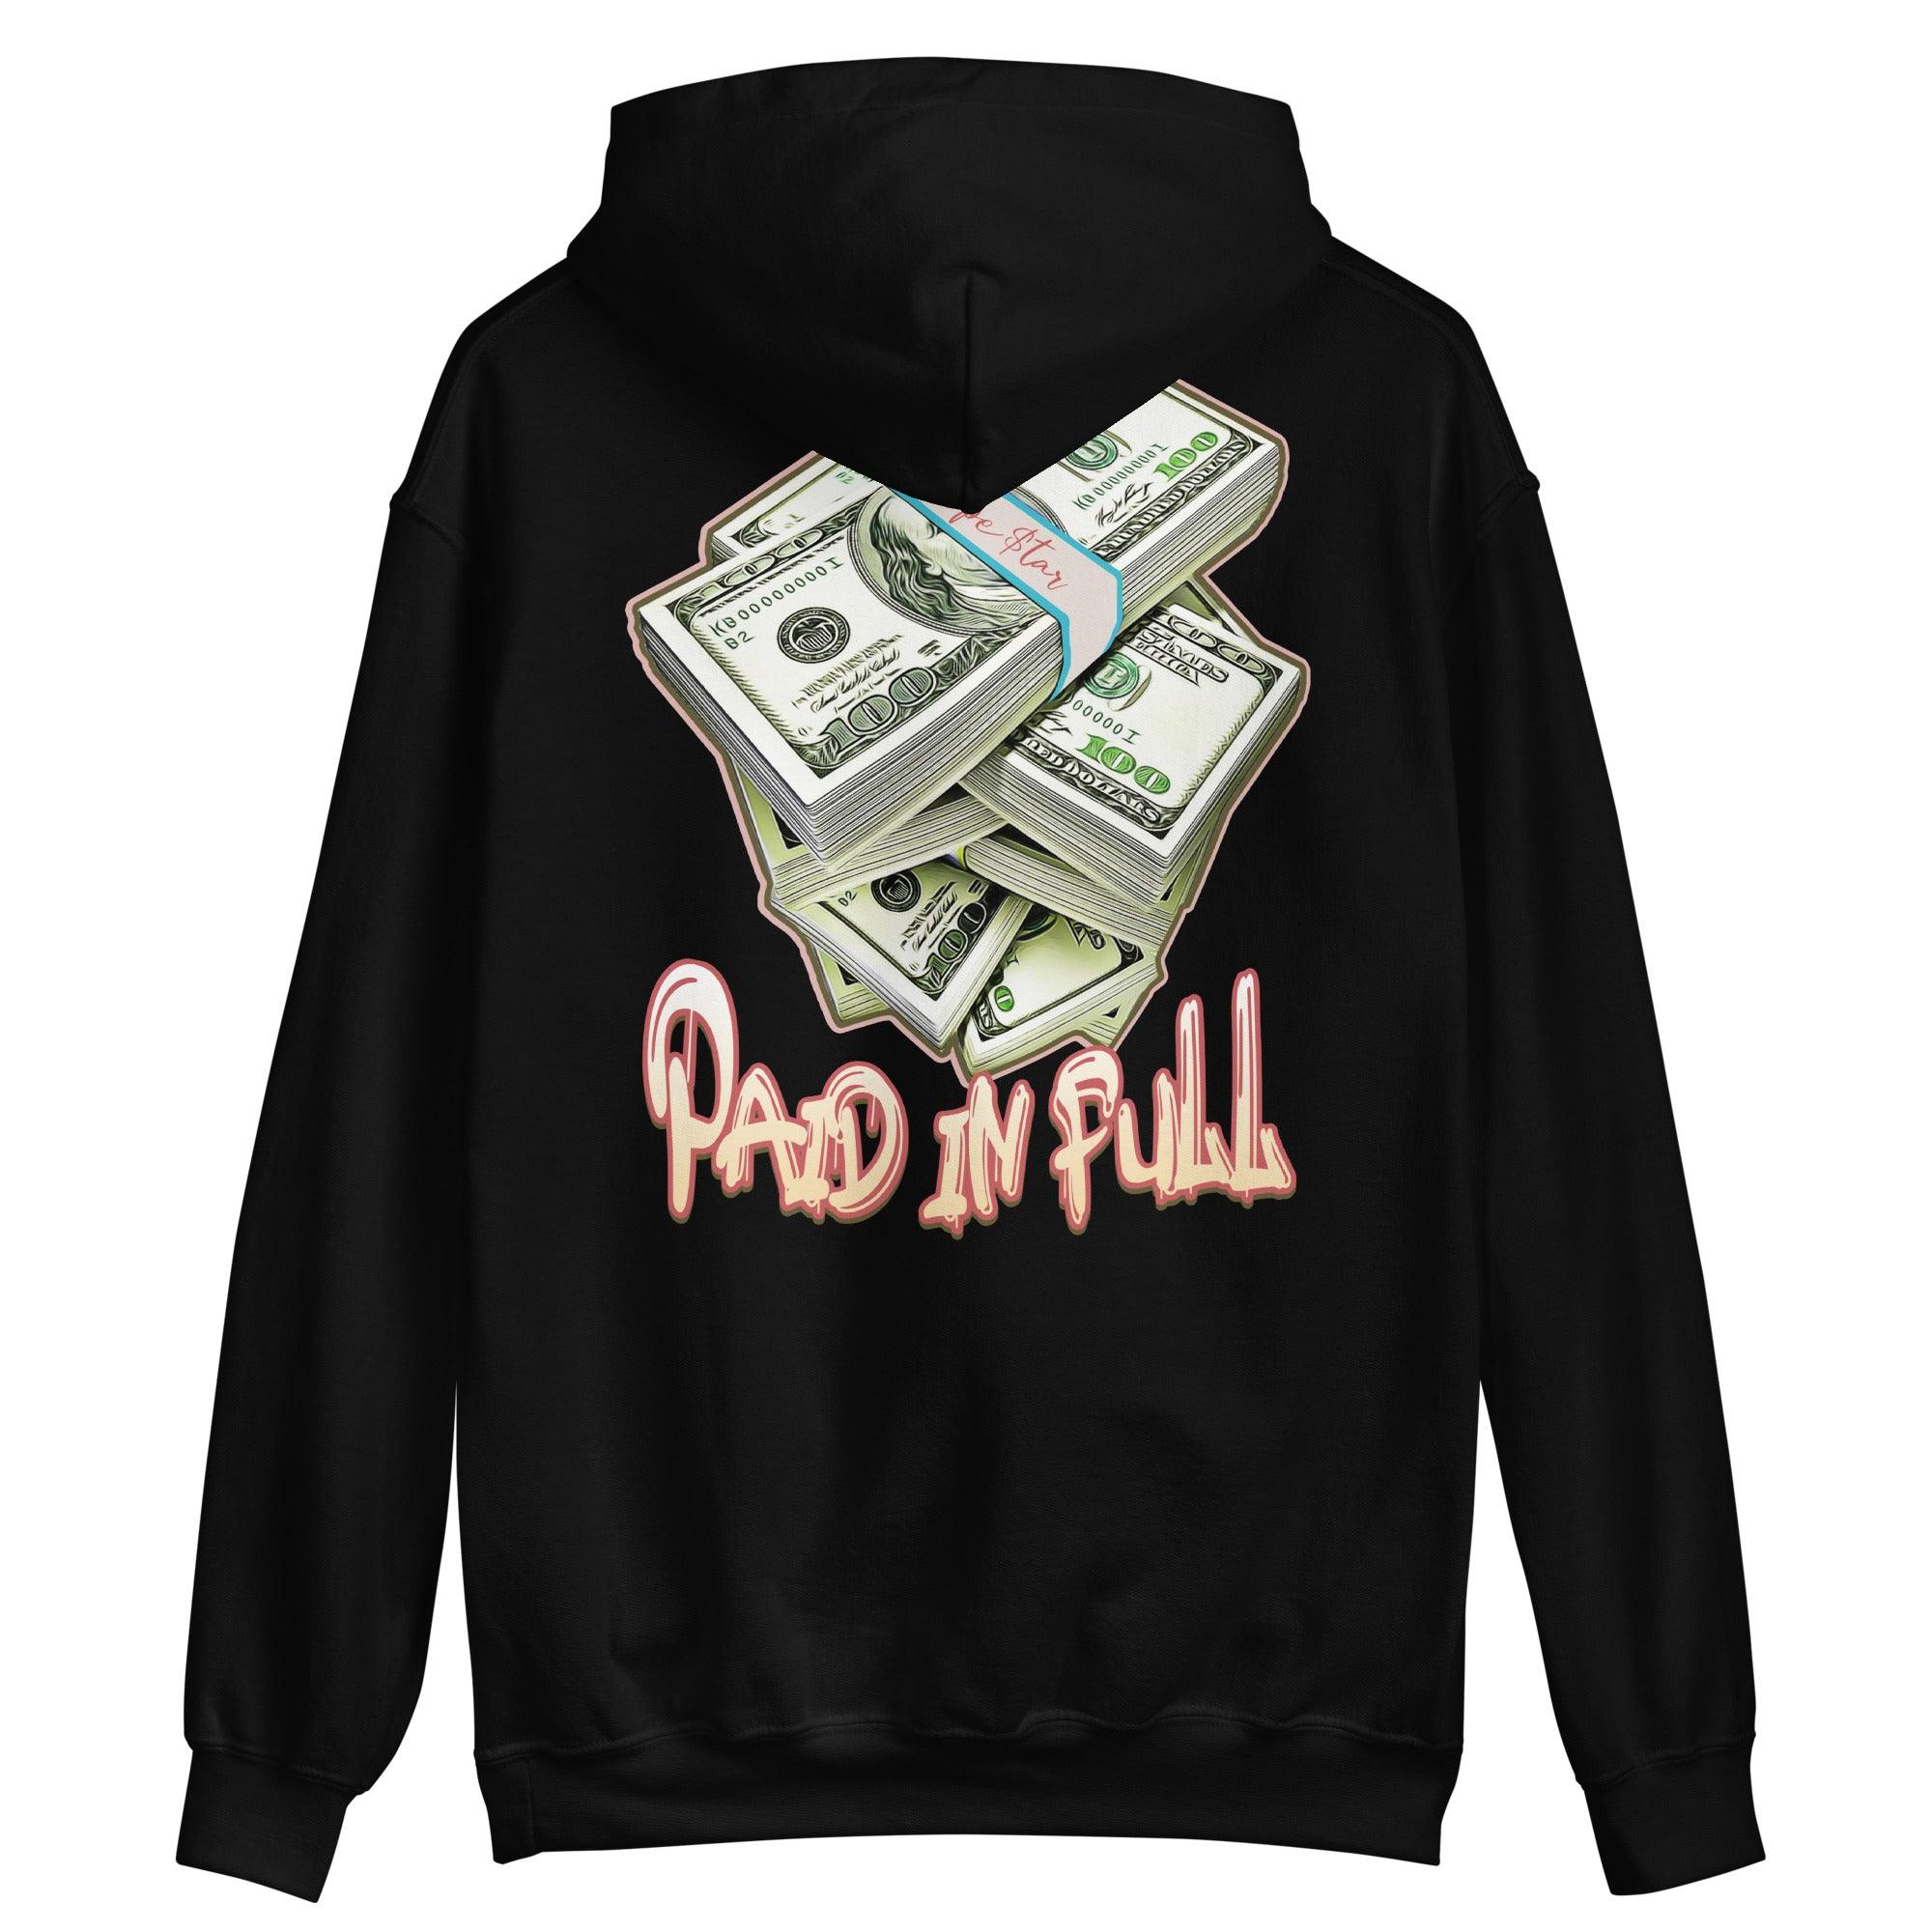 Paid In Full Sweatshirt Dunks Mid Social Status Strawberry Milk photo